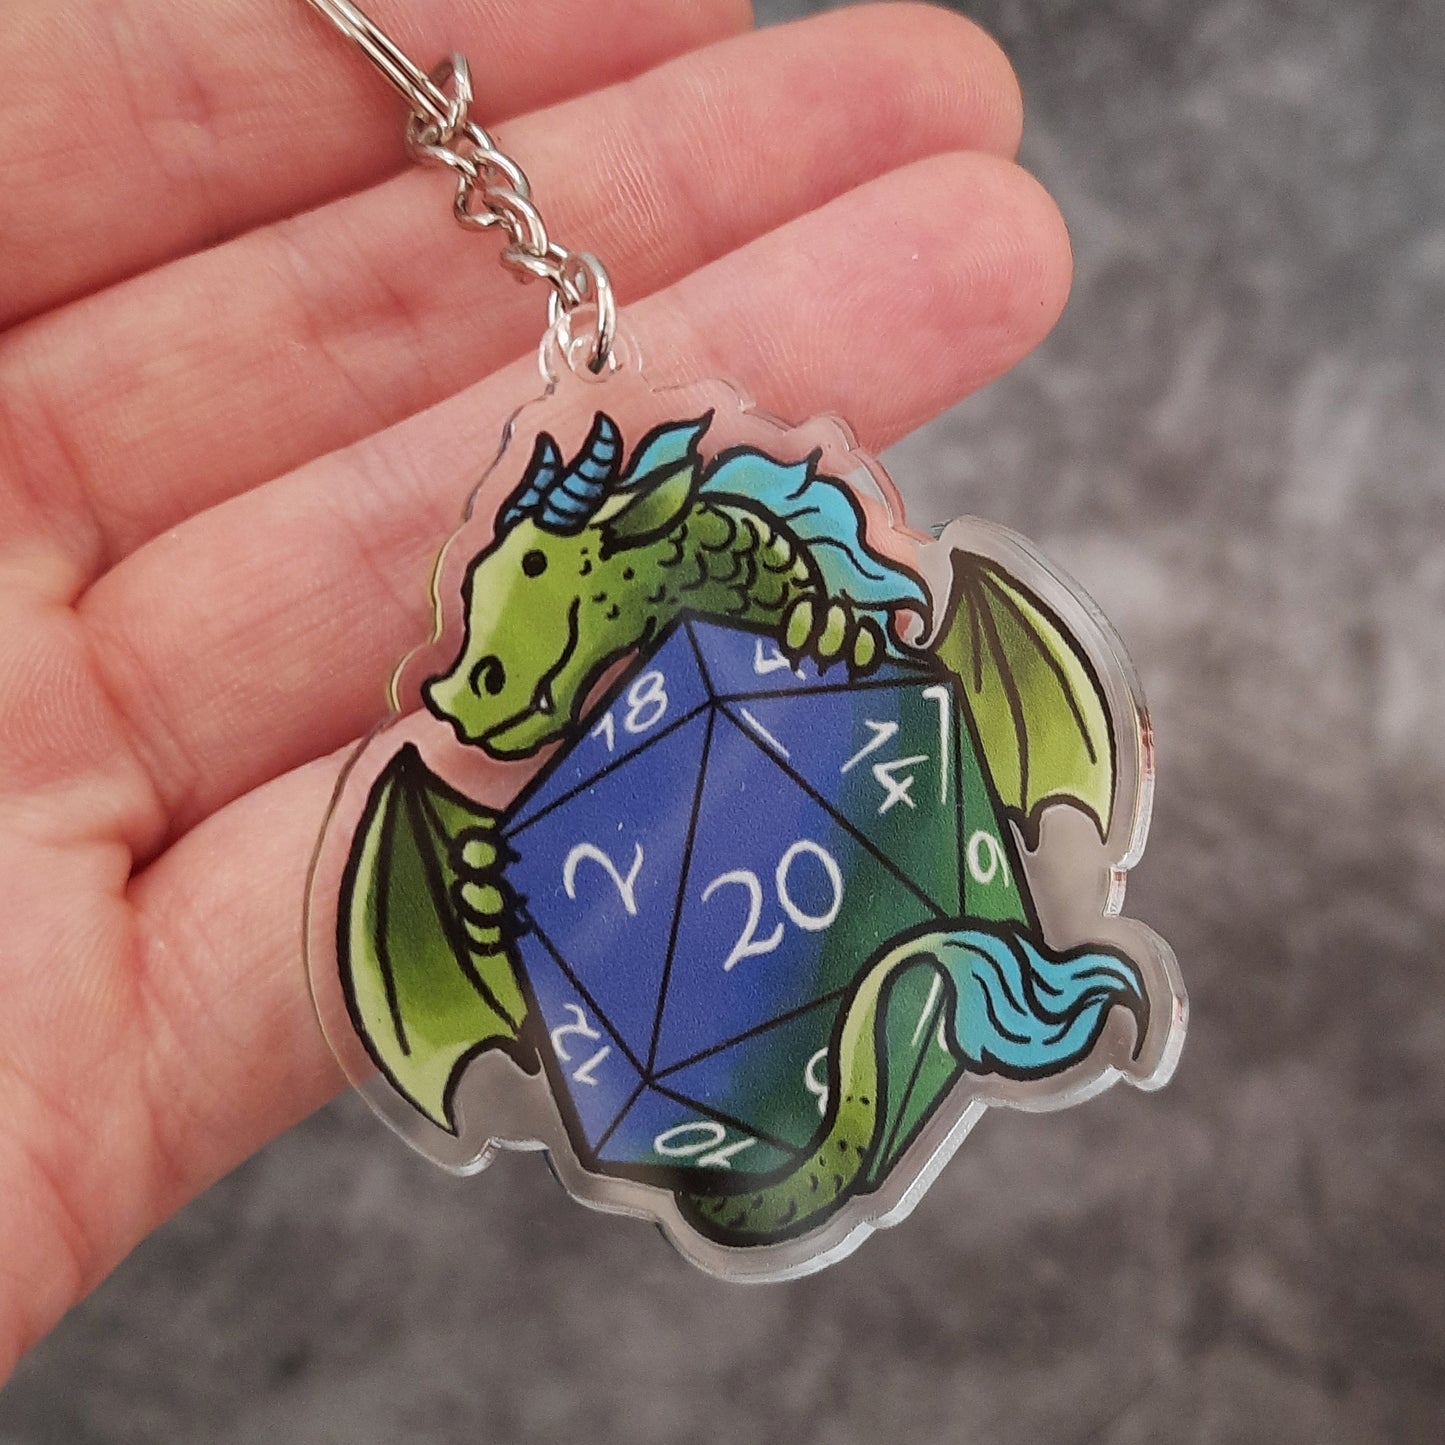 Acrylic keychain "D20 Dragon"